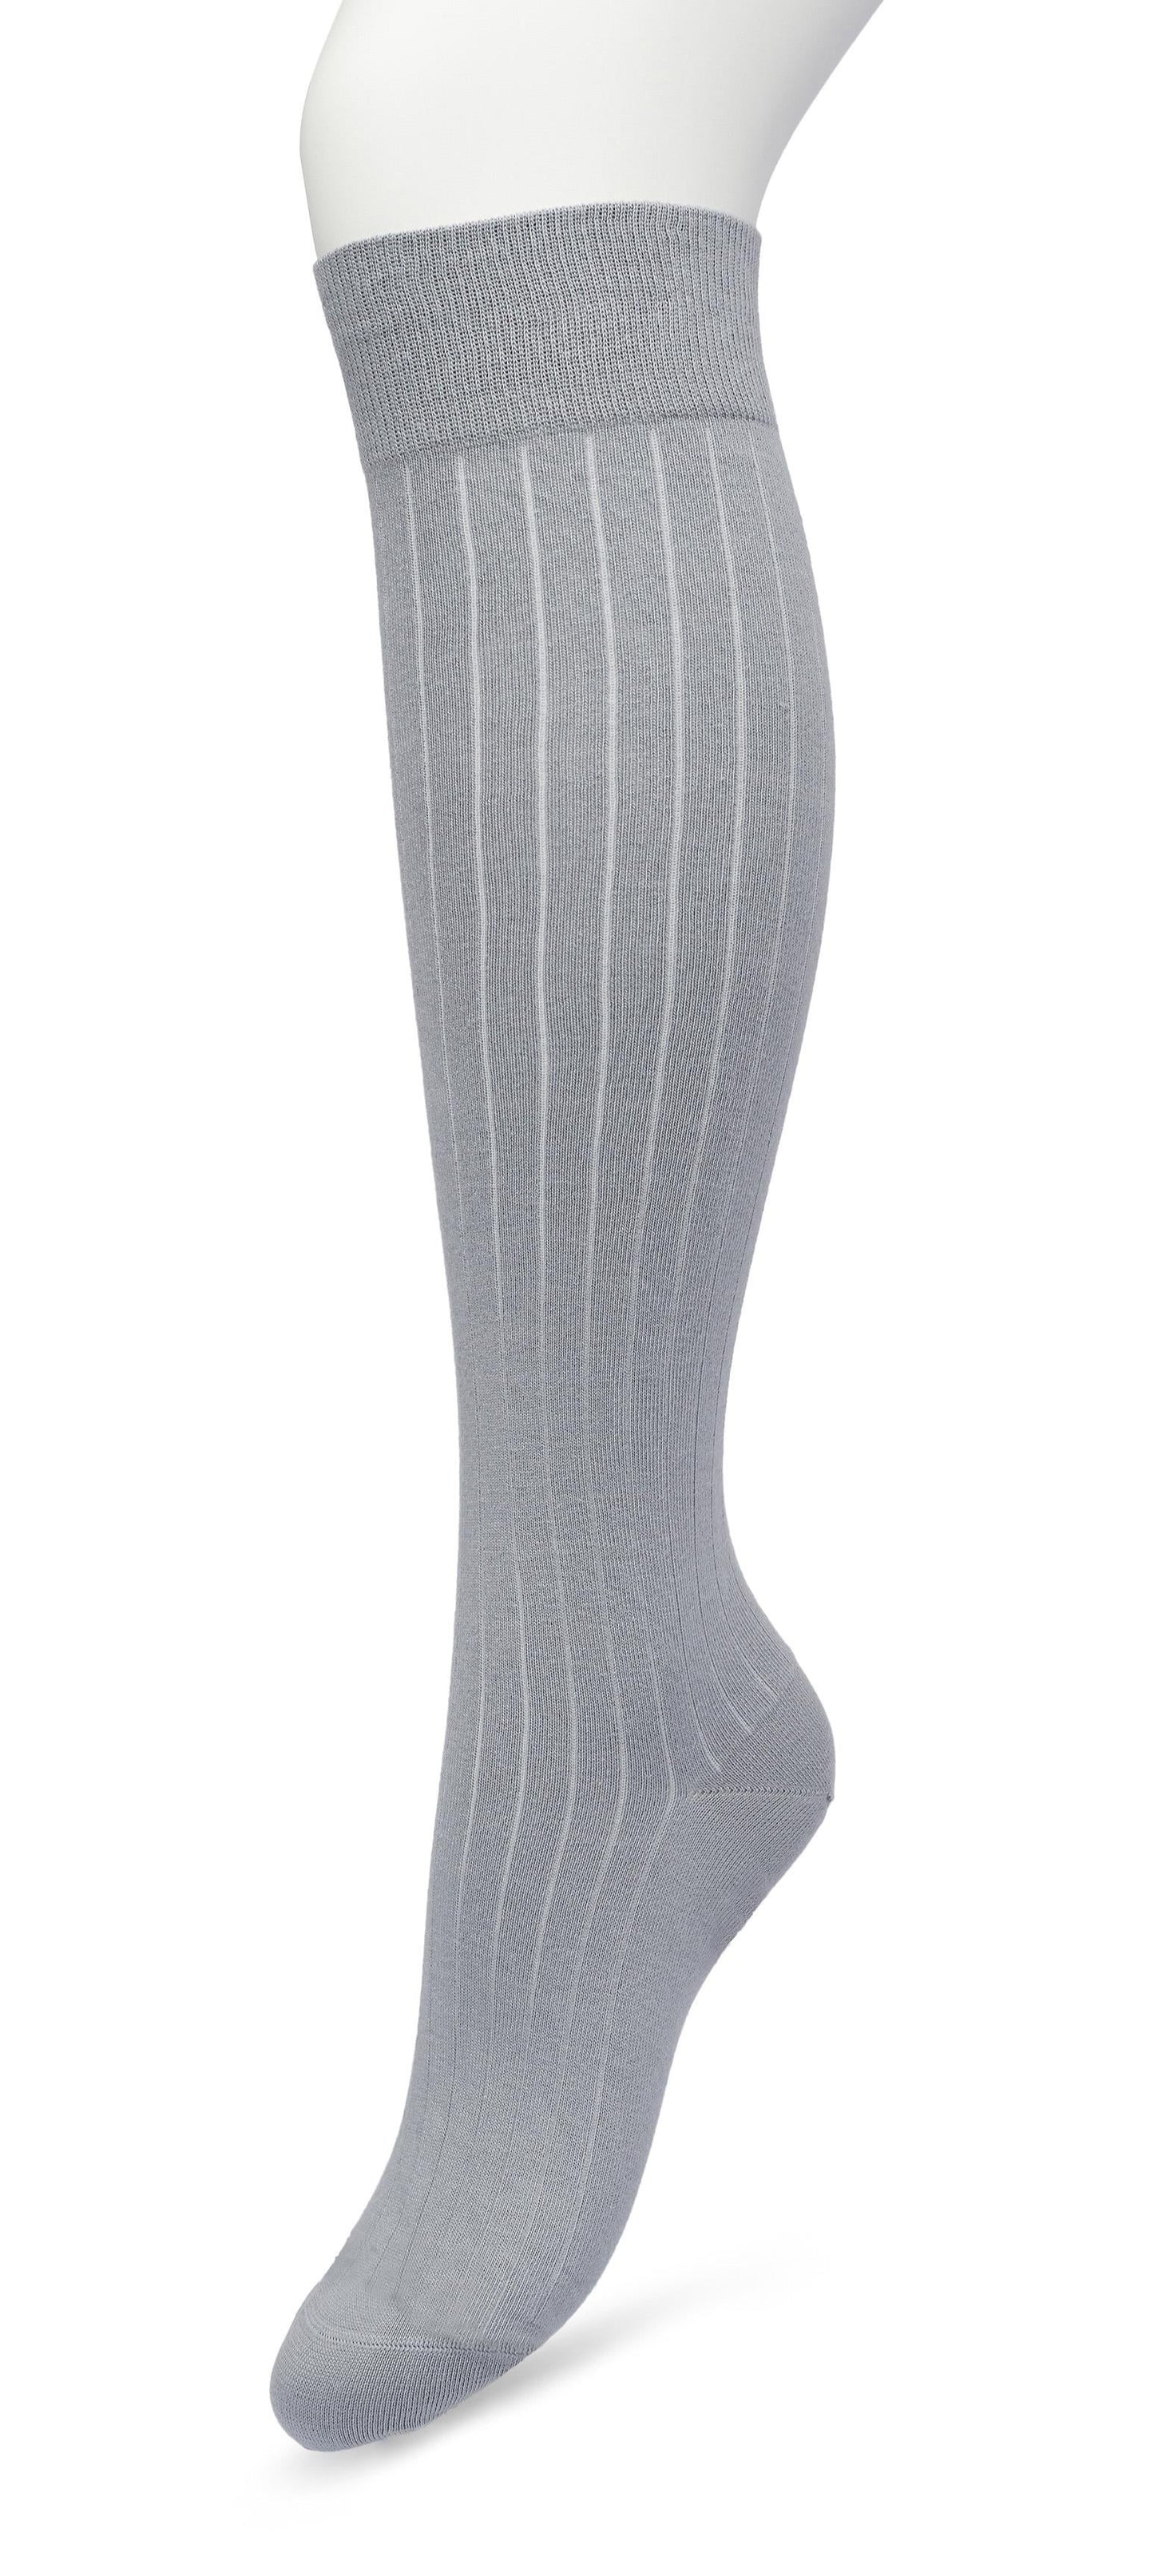 Bonnie Doon Rib Knee High Sock - Light grey light knitted rib knee-high sock with shaped heel, flat toe seam and deep elasticated cuff.